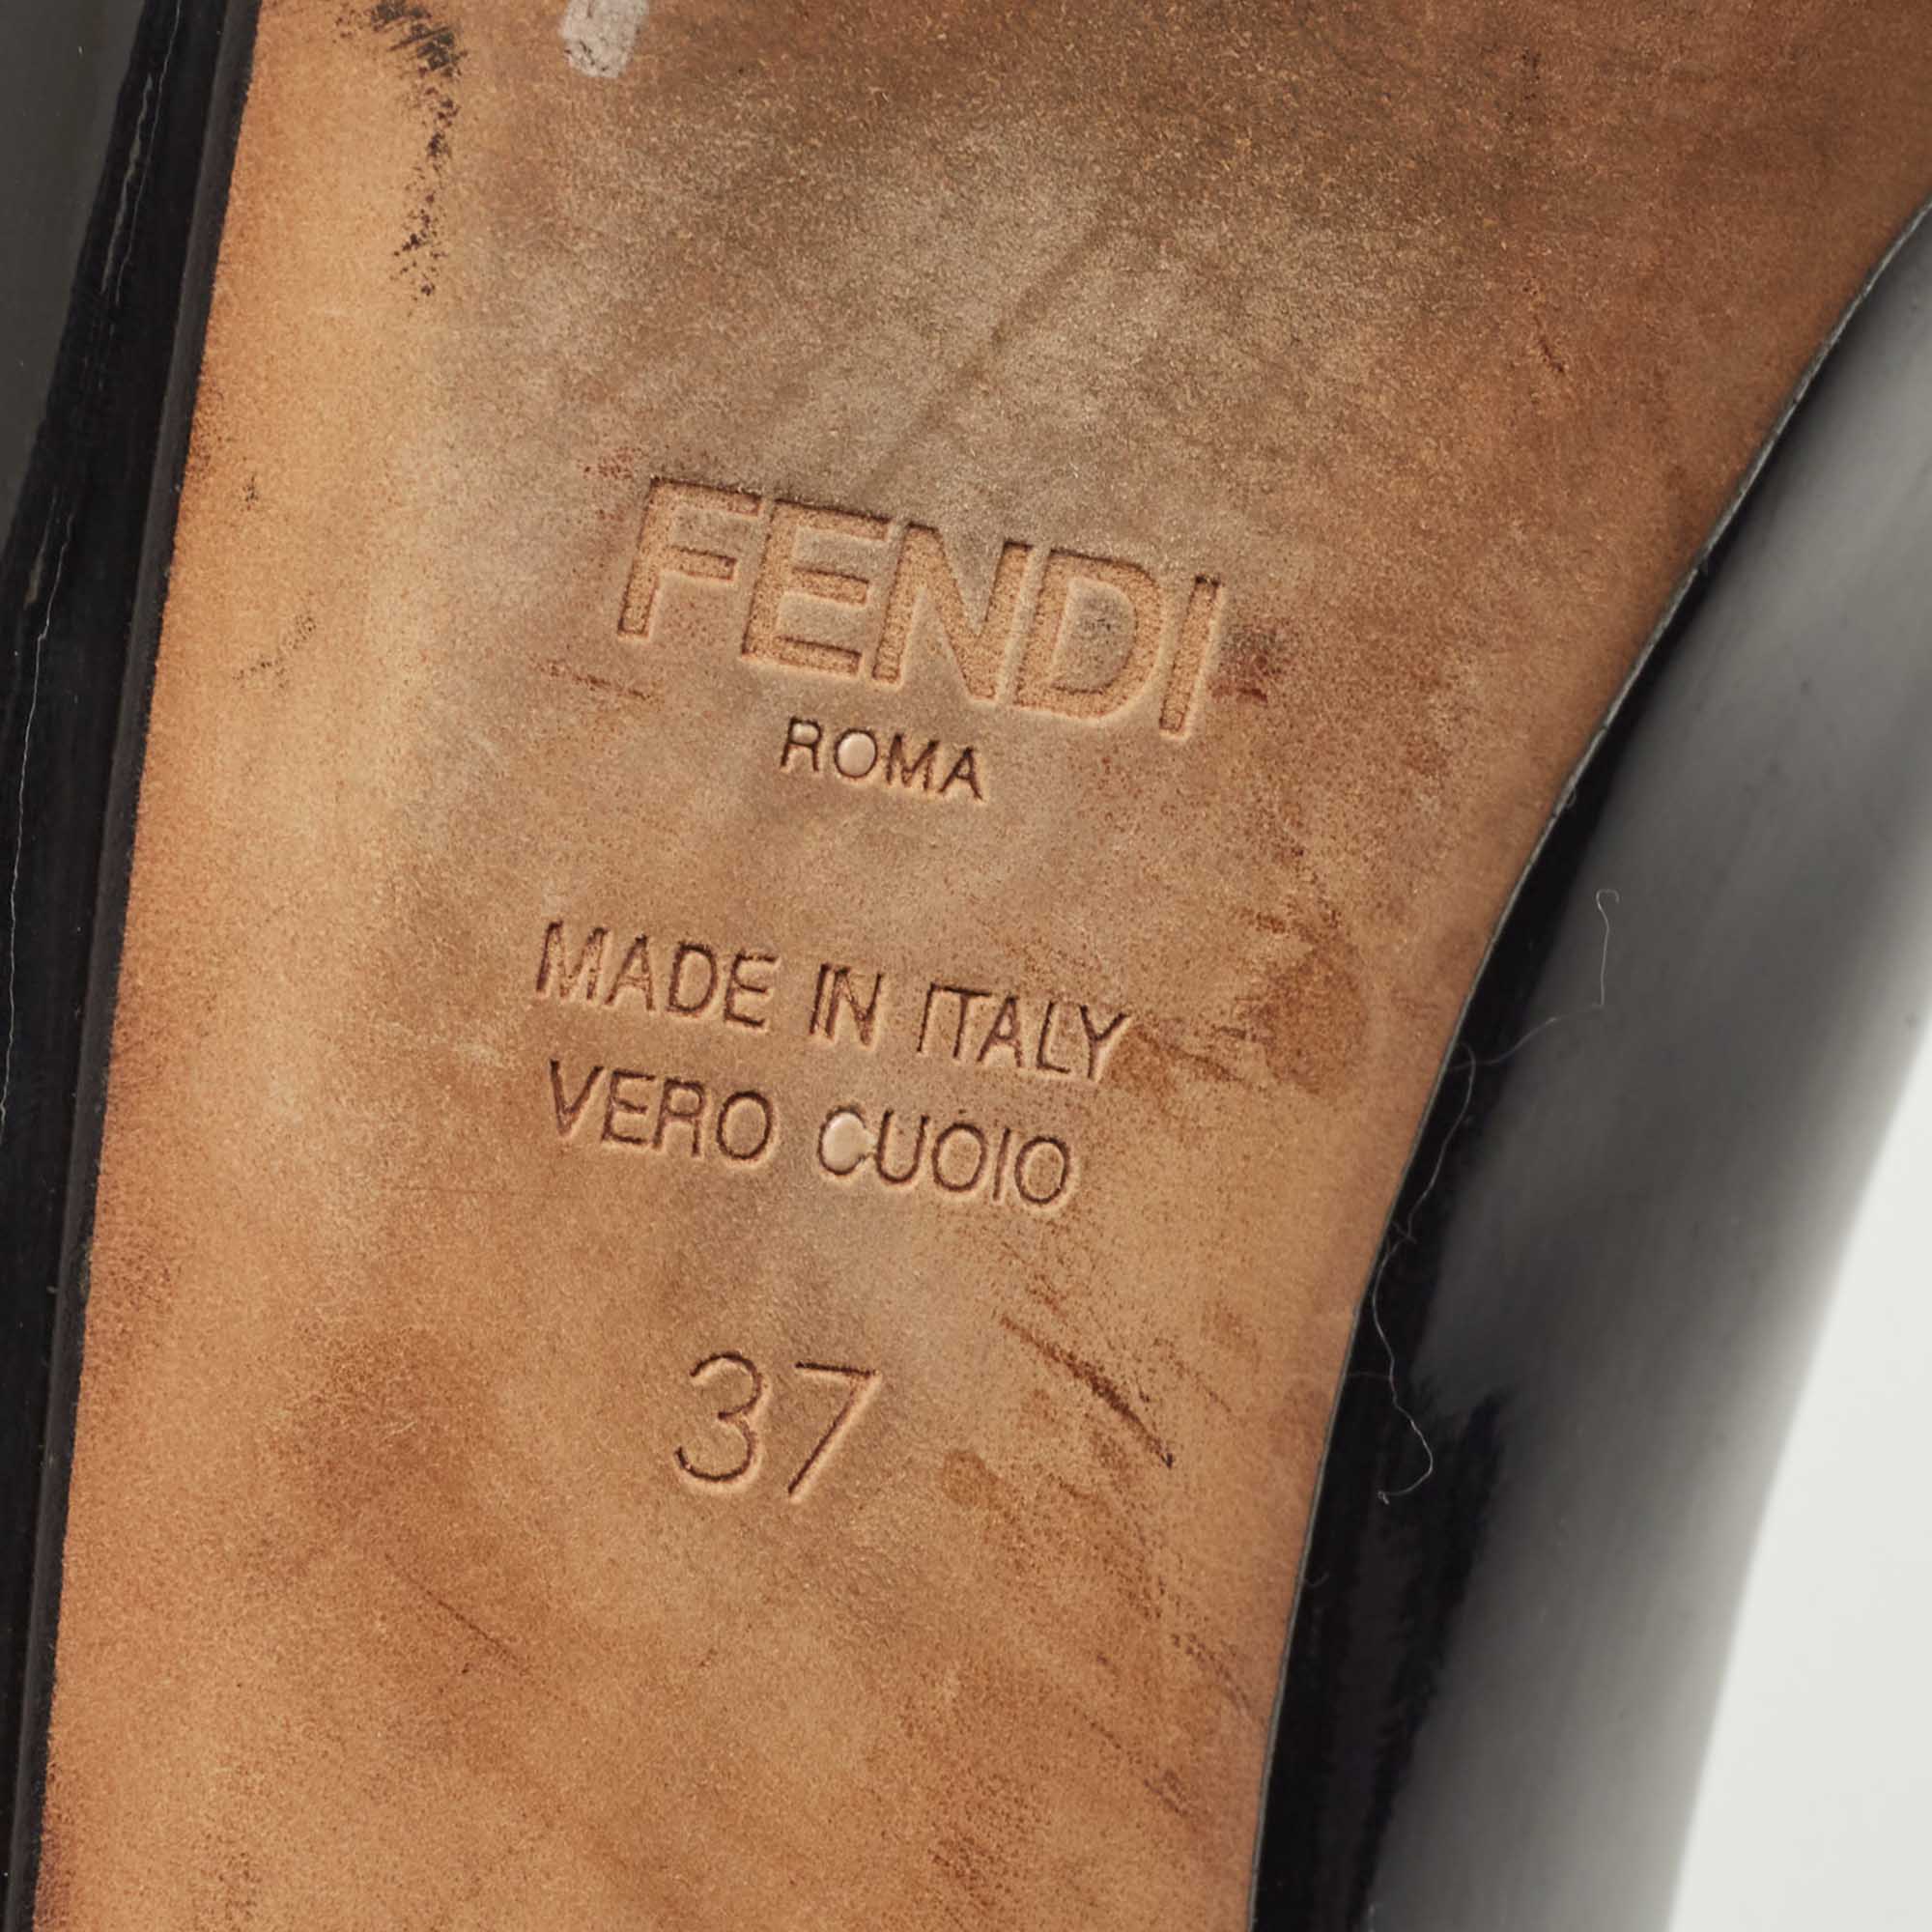 Fendi Black Patent Leather Peep Toe Platform Pumps Size 37